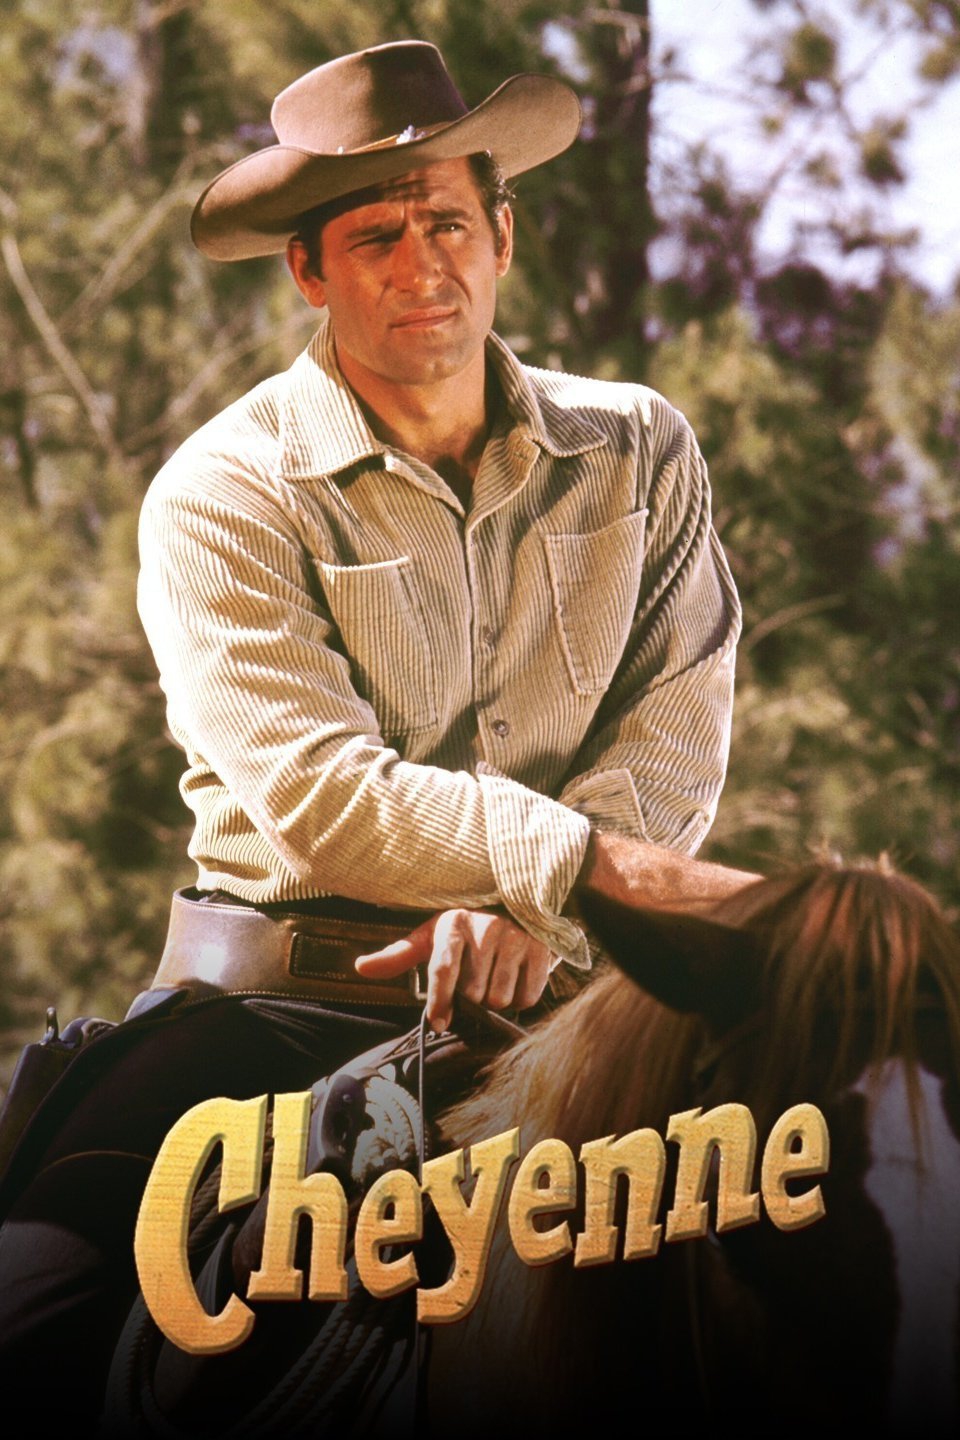 Cheyenne Season 3 Episodes Streaming Online Free Trial